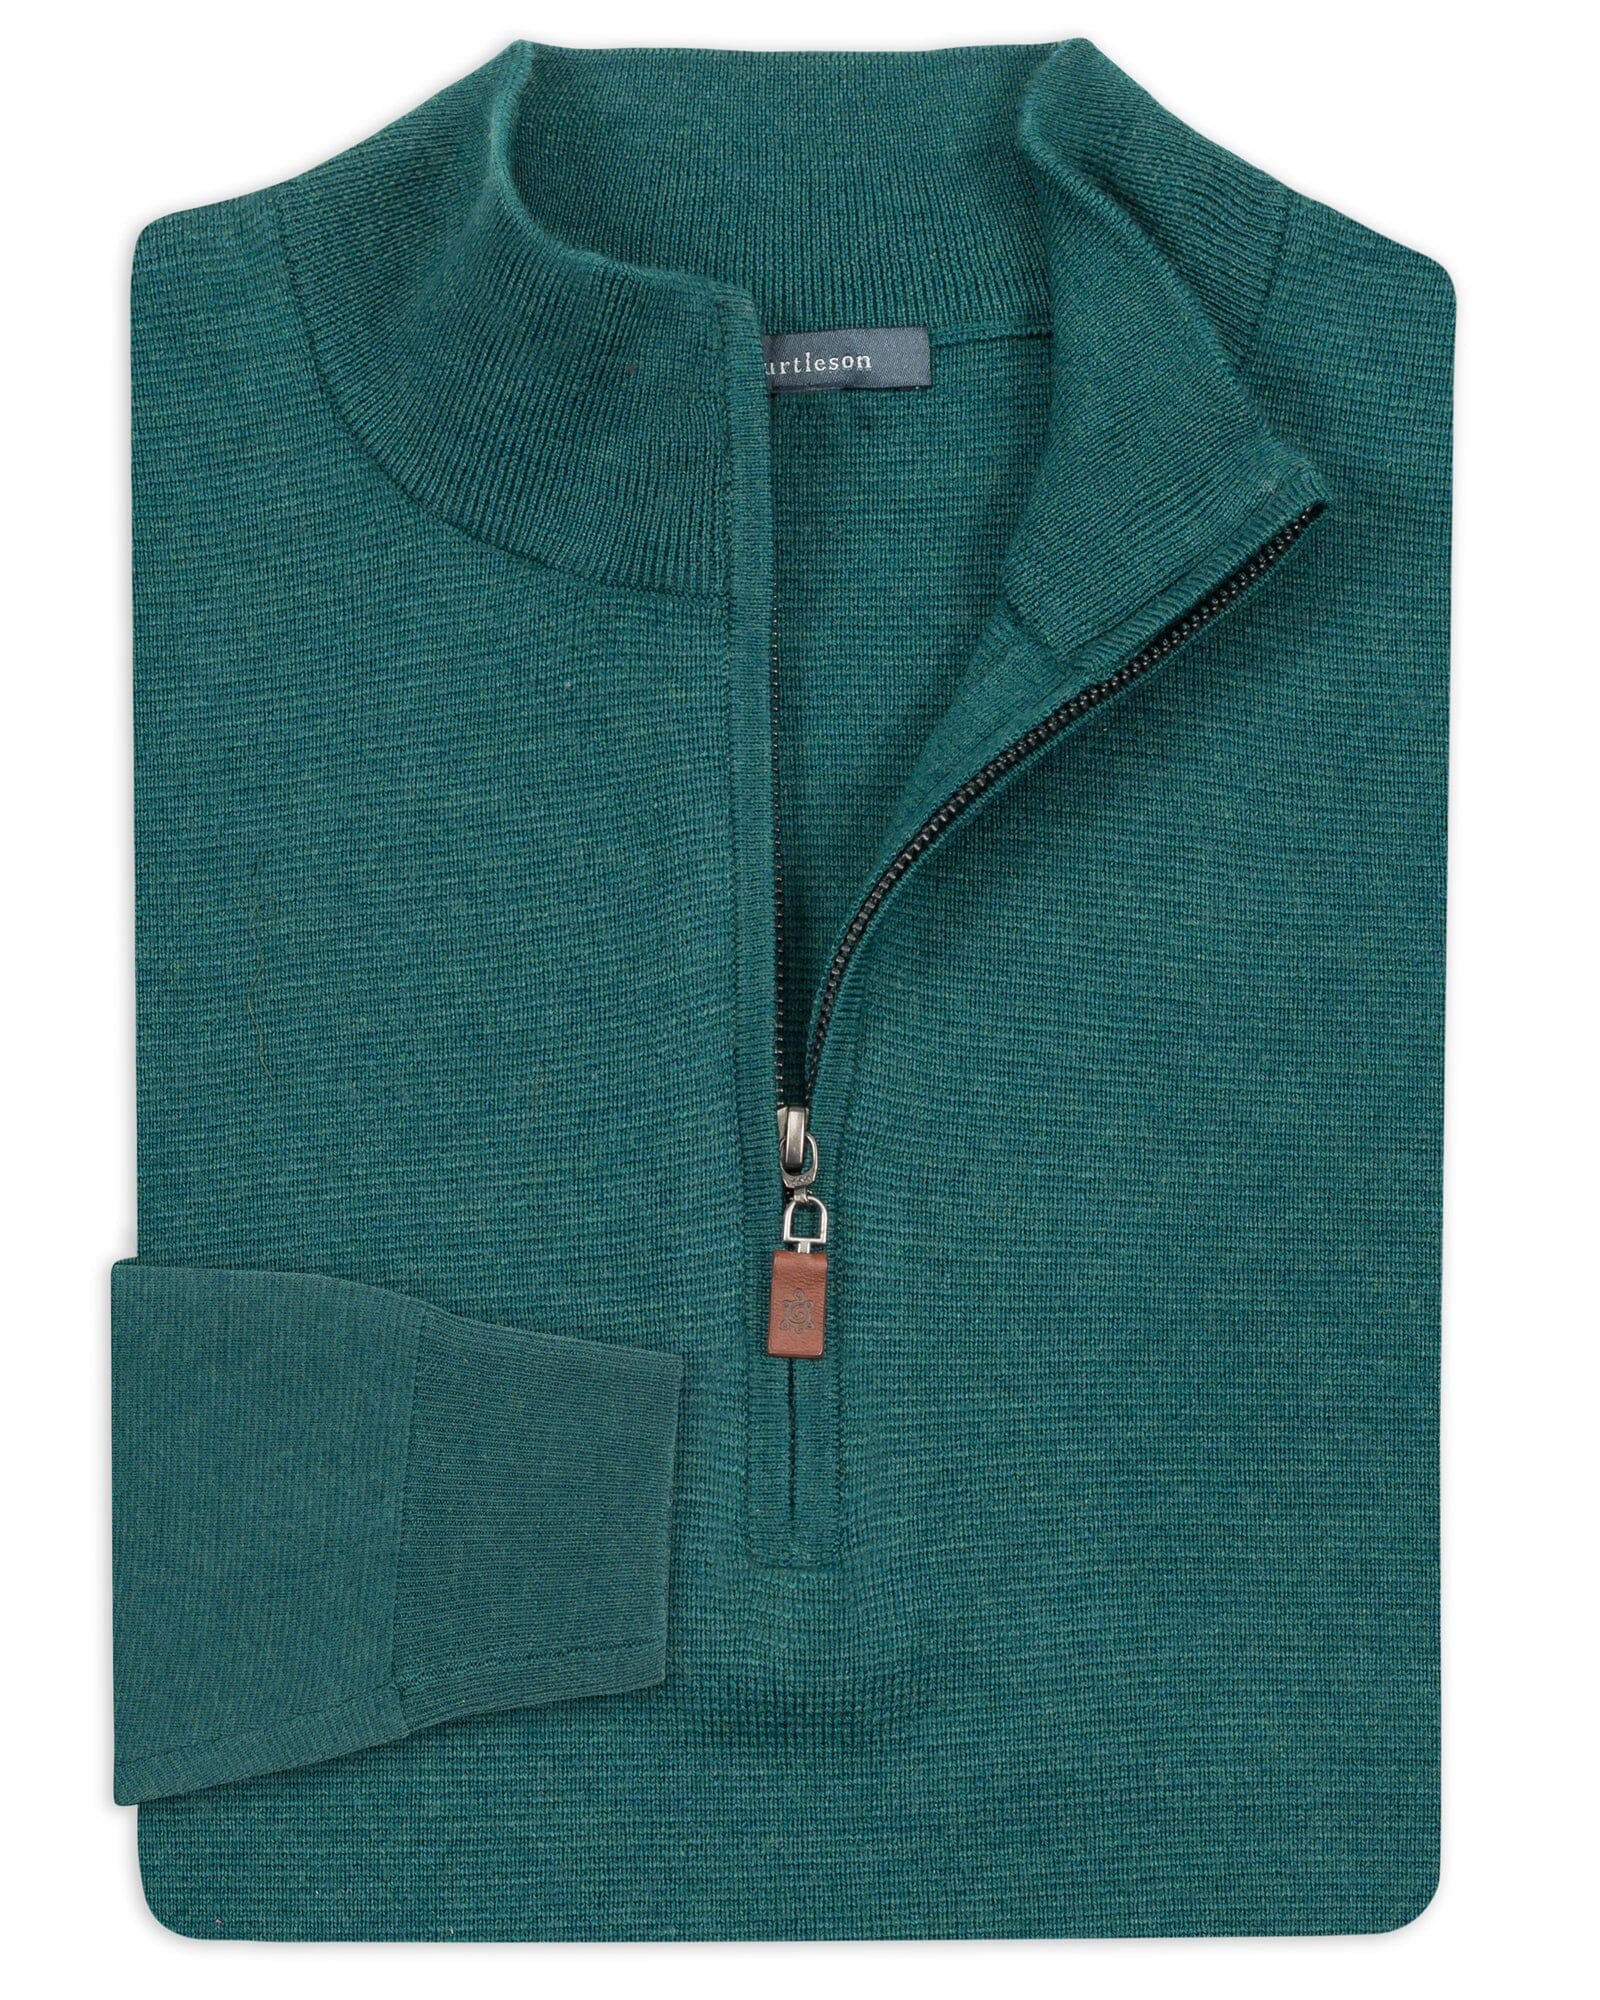 Sweater Milano-Stitch turtleson Merino Extra Quarter-Zip – Fine